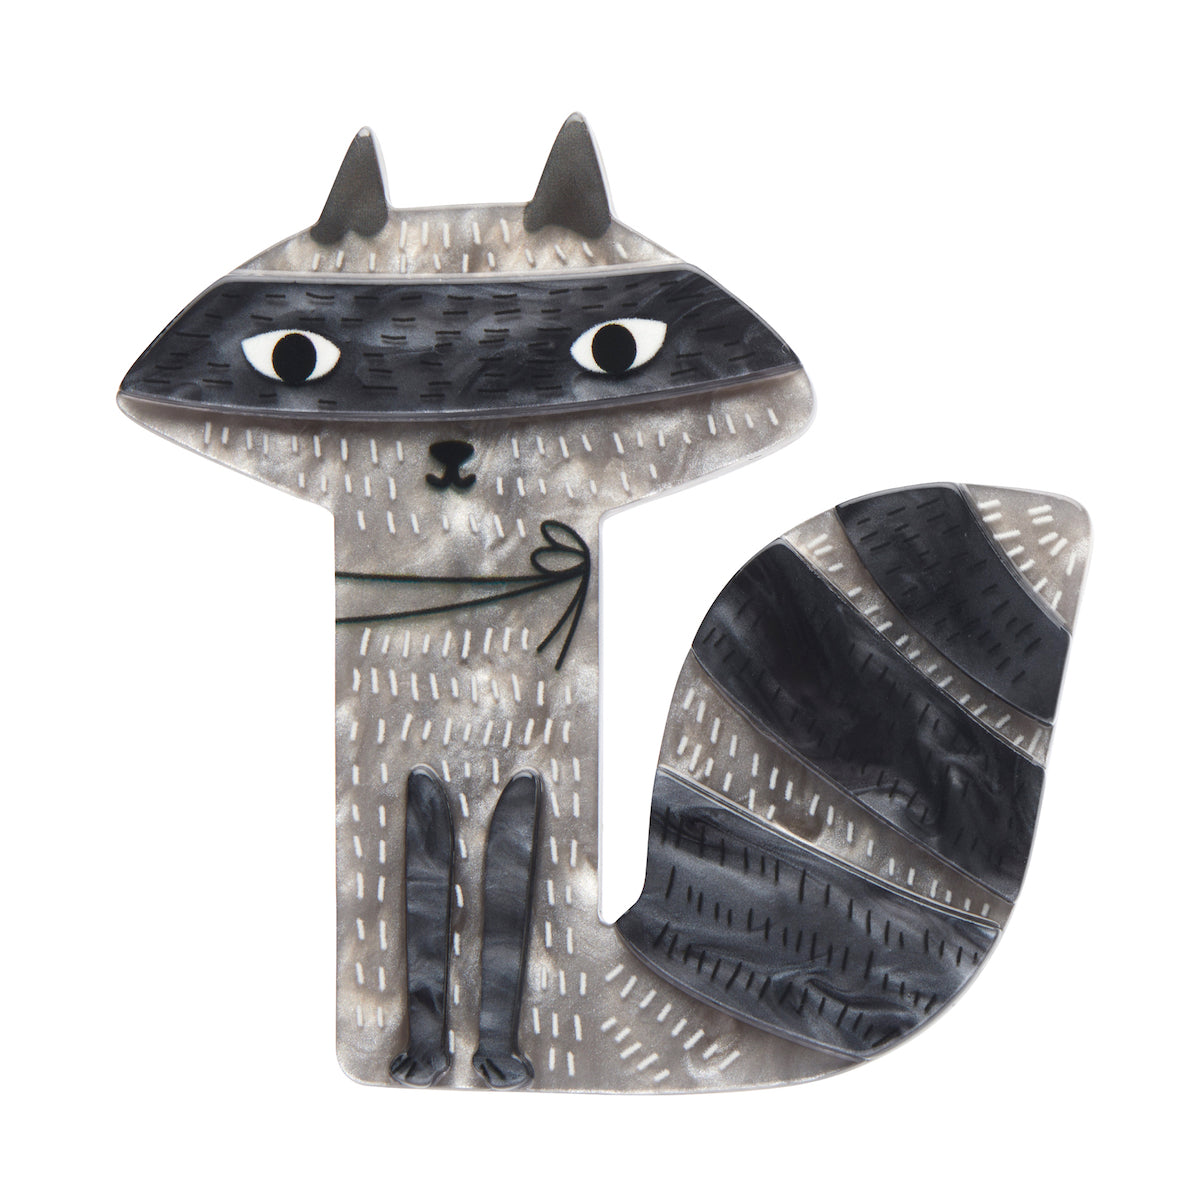 Terry Runyan Collaboration Collection "Sunday Raccoon" layered resin grey and black trash panda brooch